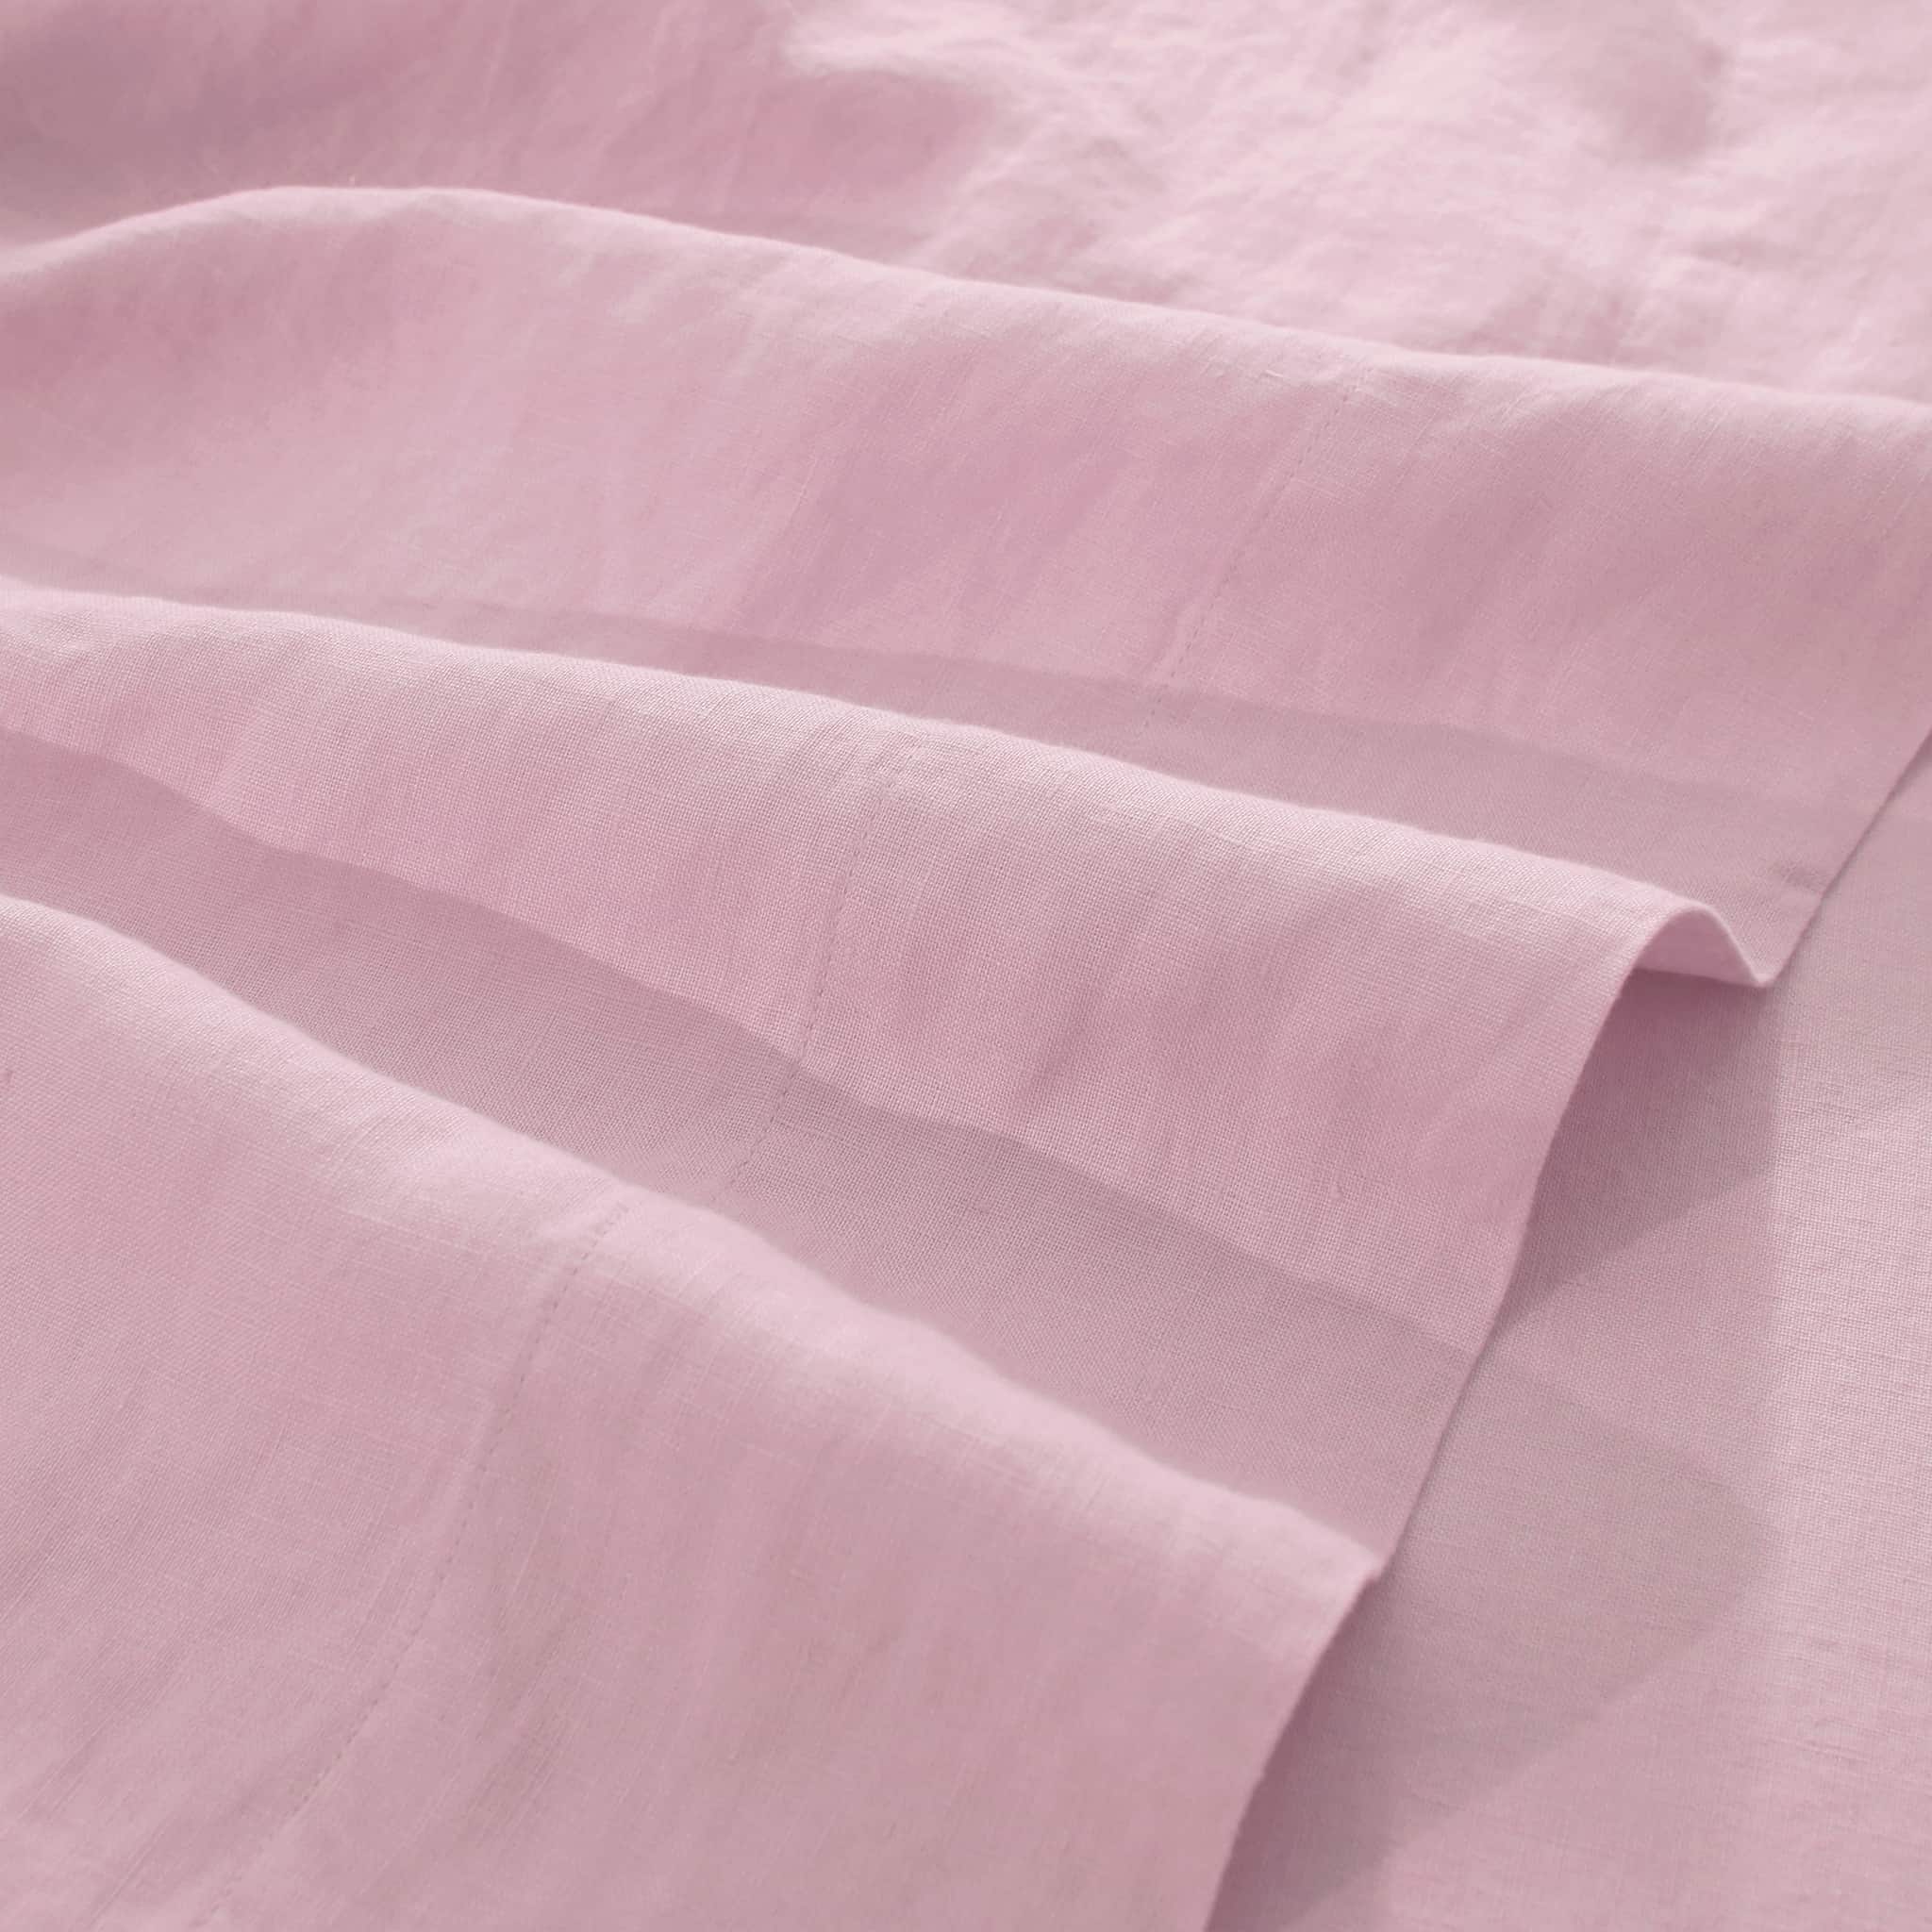 Soft Pink Linen Fitted Sheet